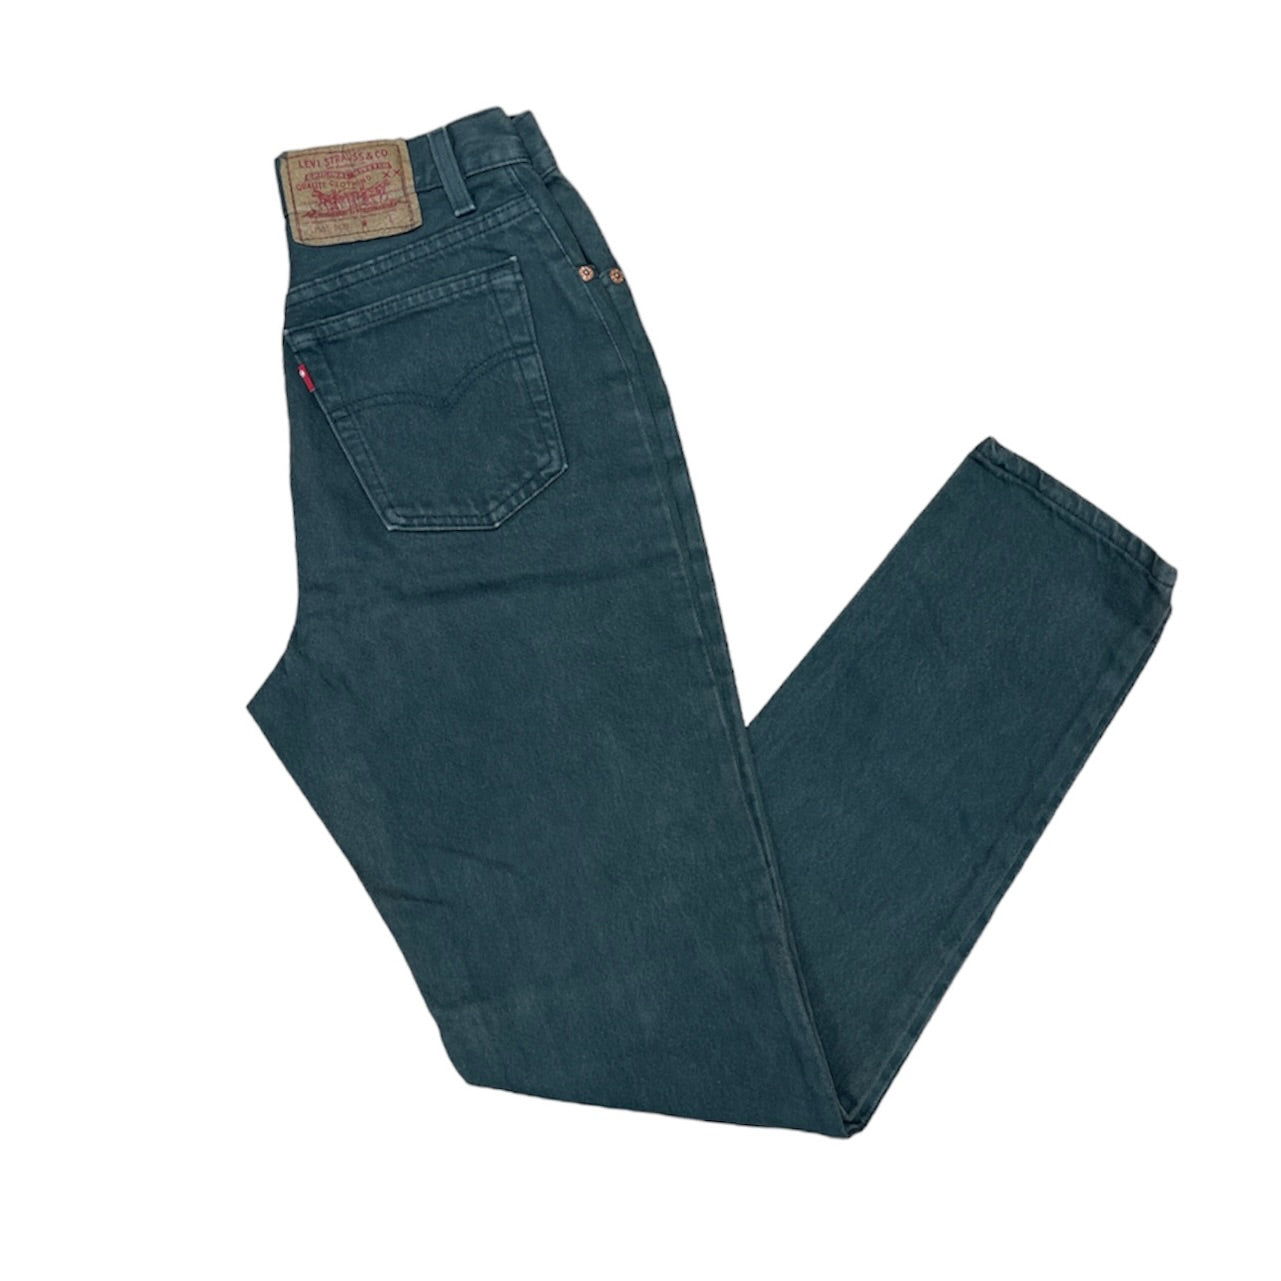 Vintage Levis 501 Green Jeans (W27)